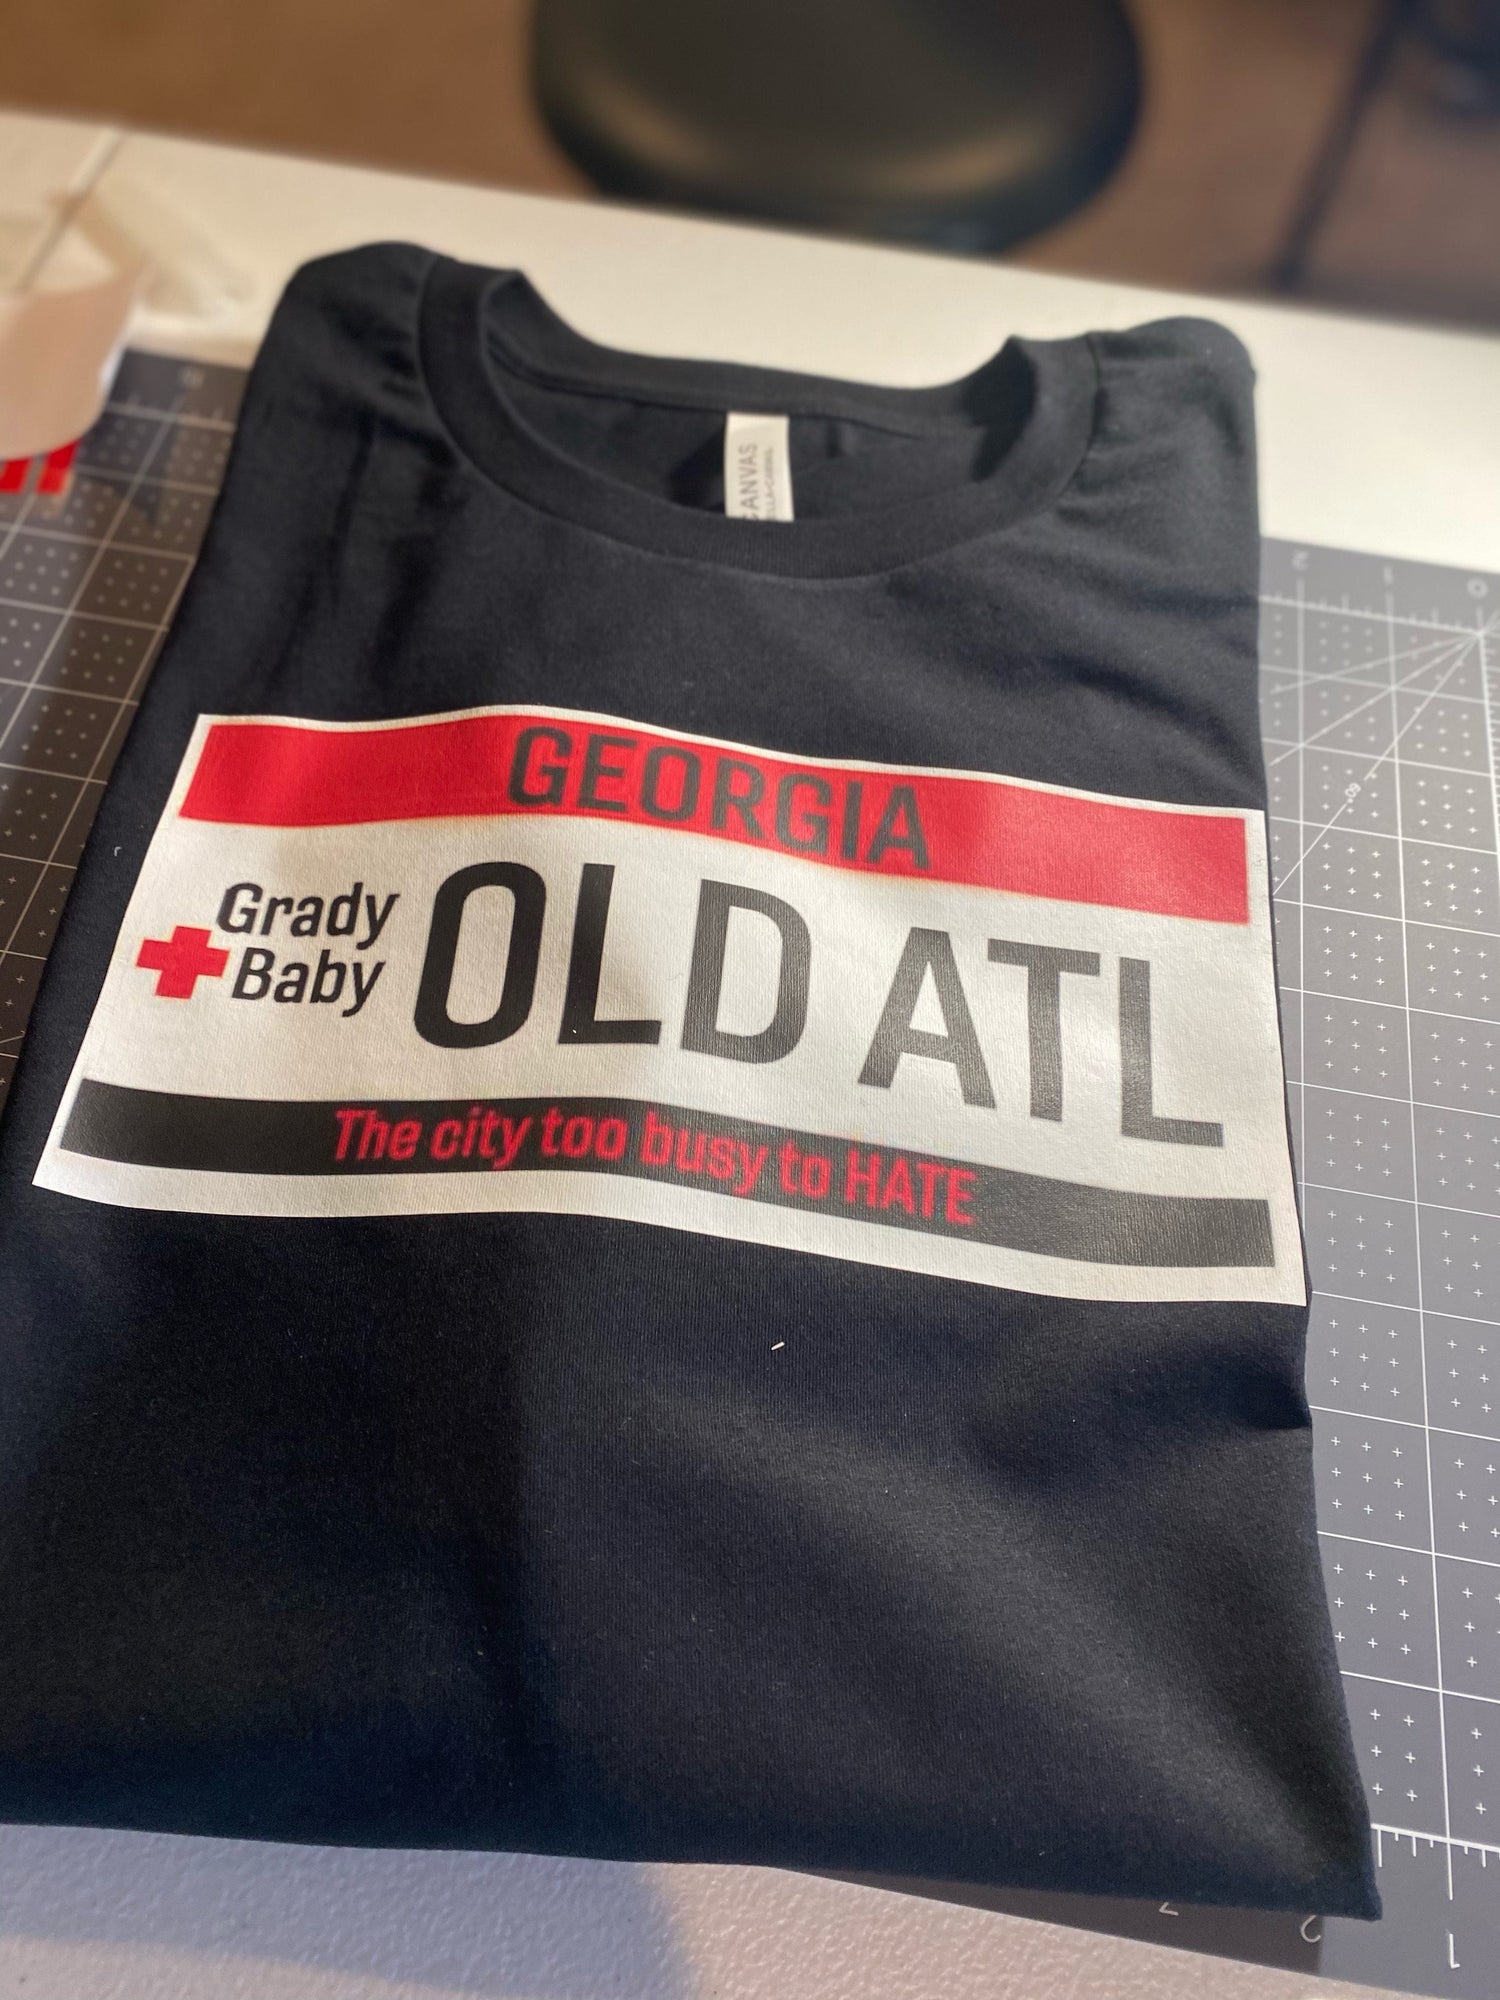 OLD ATL - Grady Baby License Plate Shirt B1ack By Design LLC 